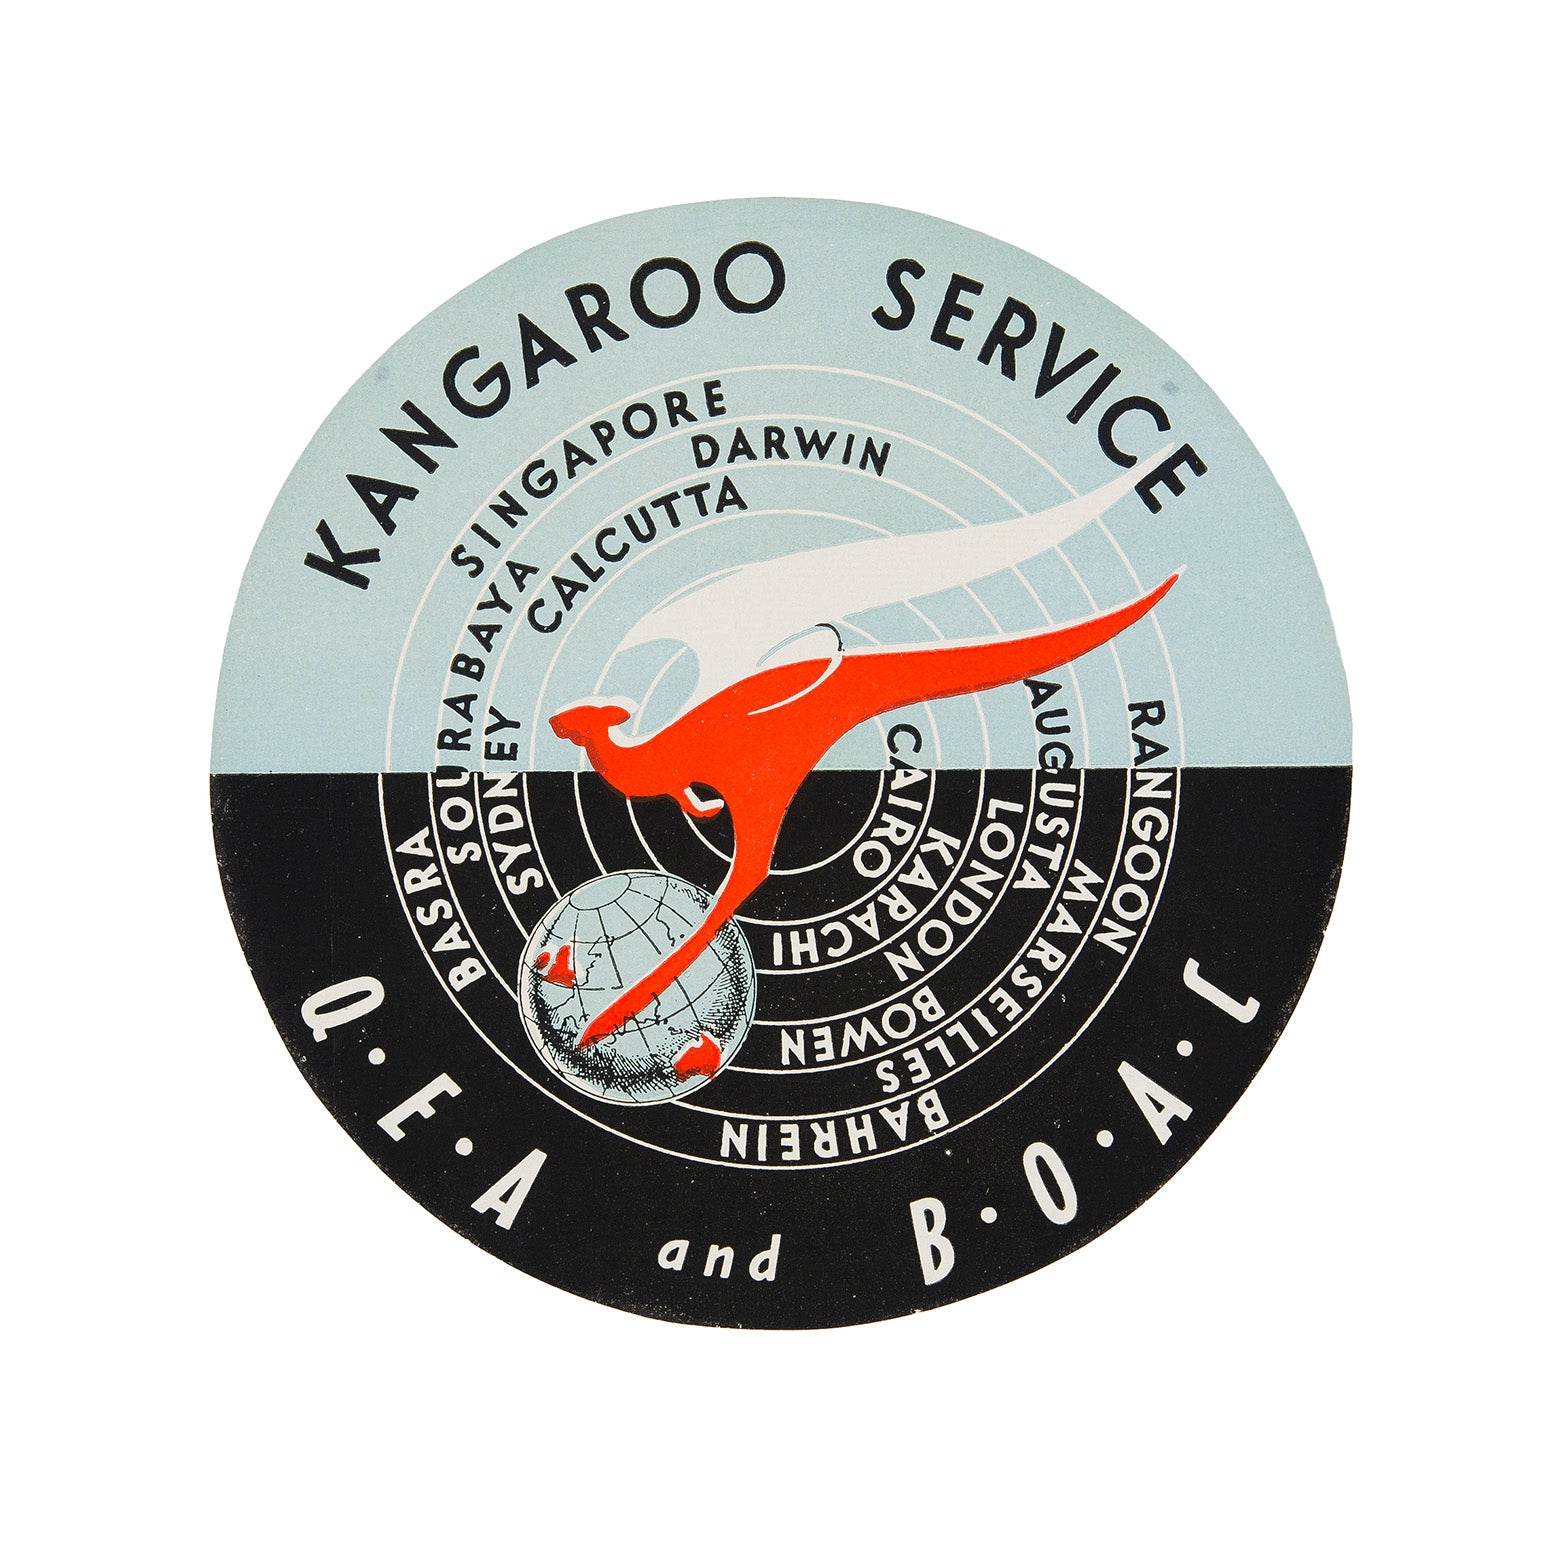 QEA and BOAC Kangaroo Service (Luggage Label)